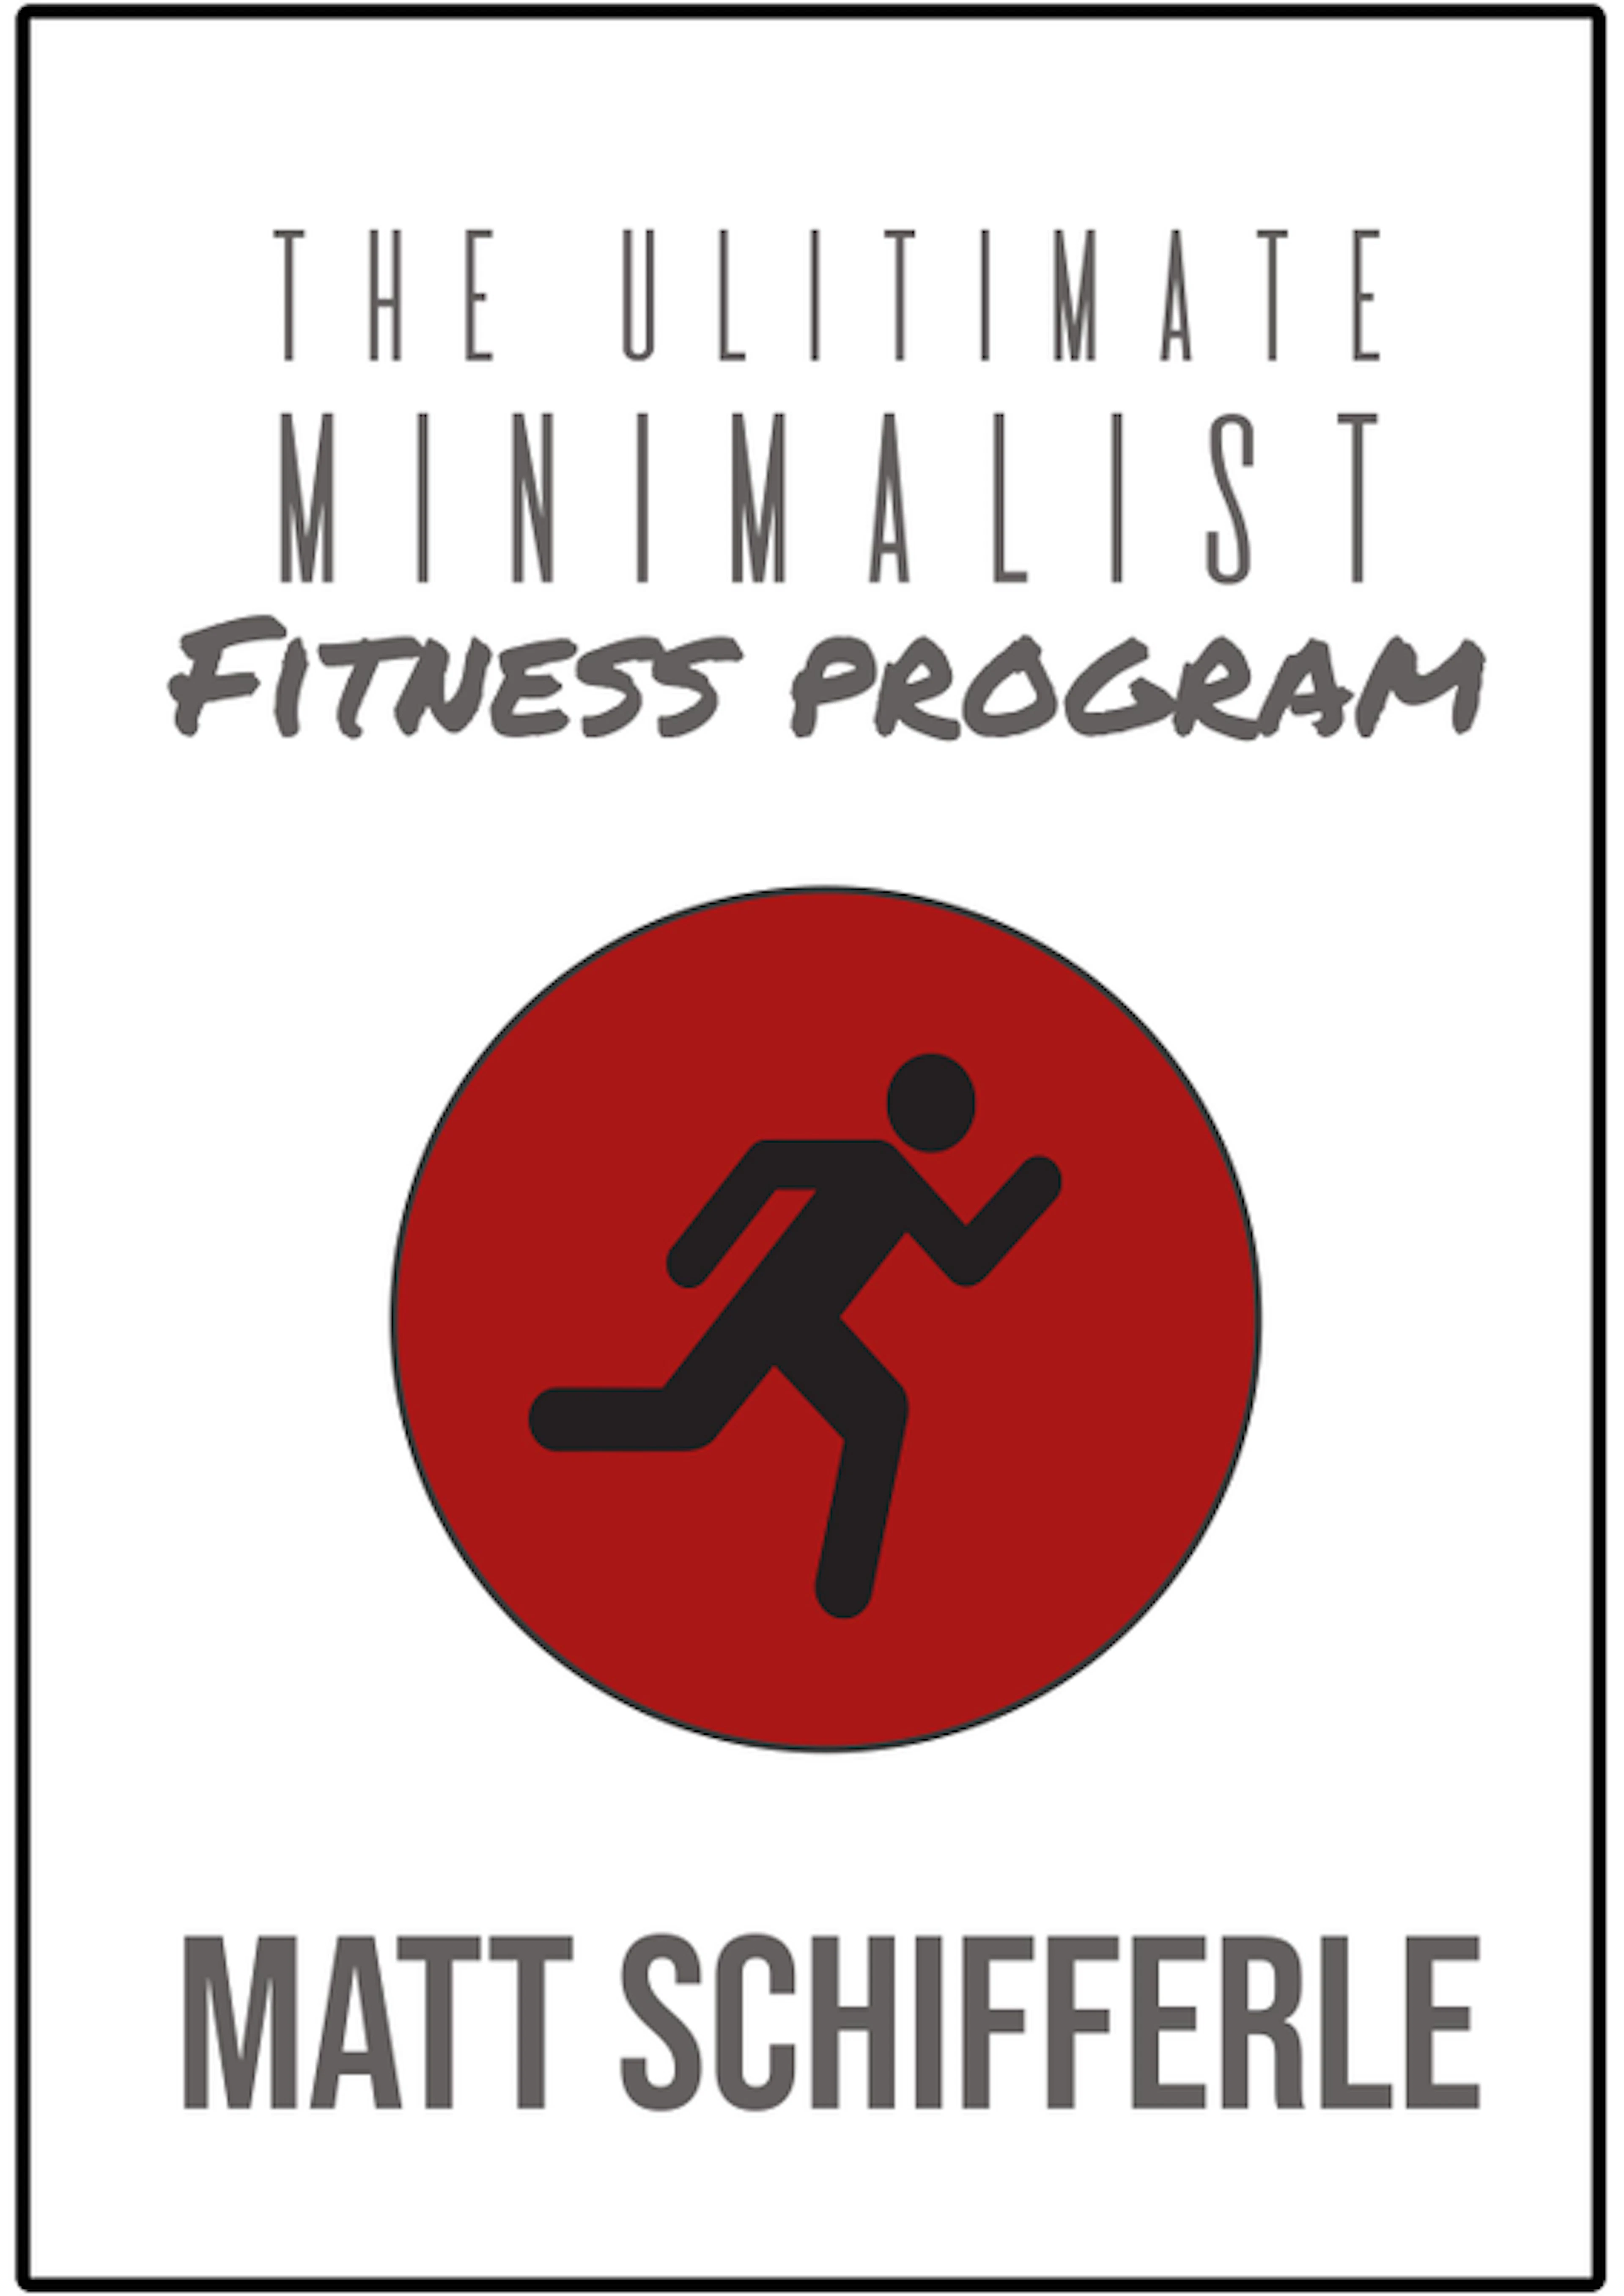 The Ultimate Minimalist Fitness Program